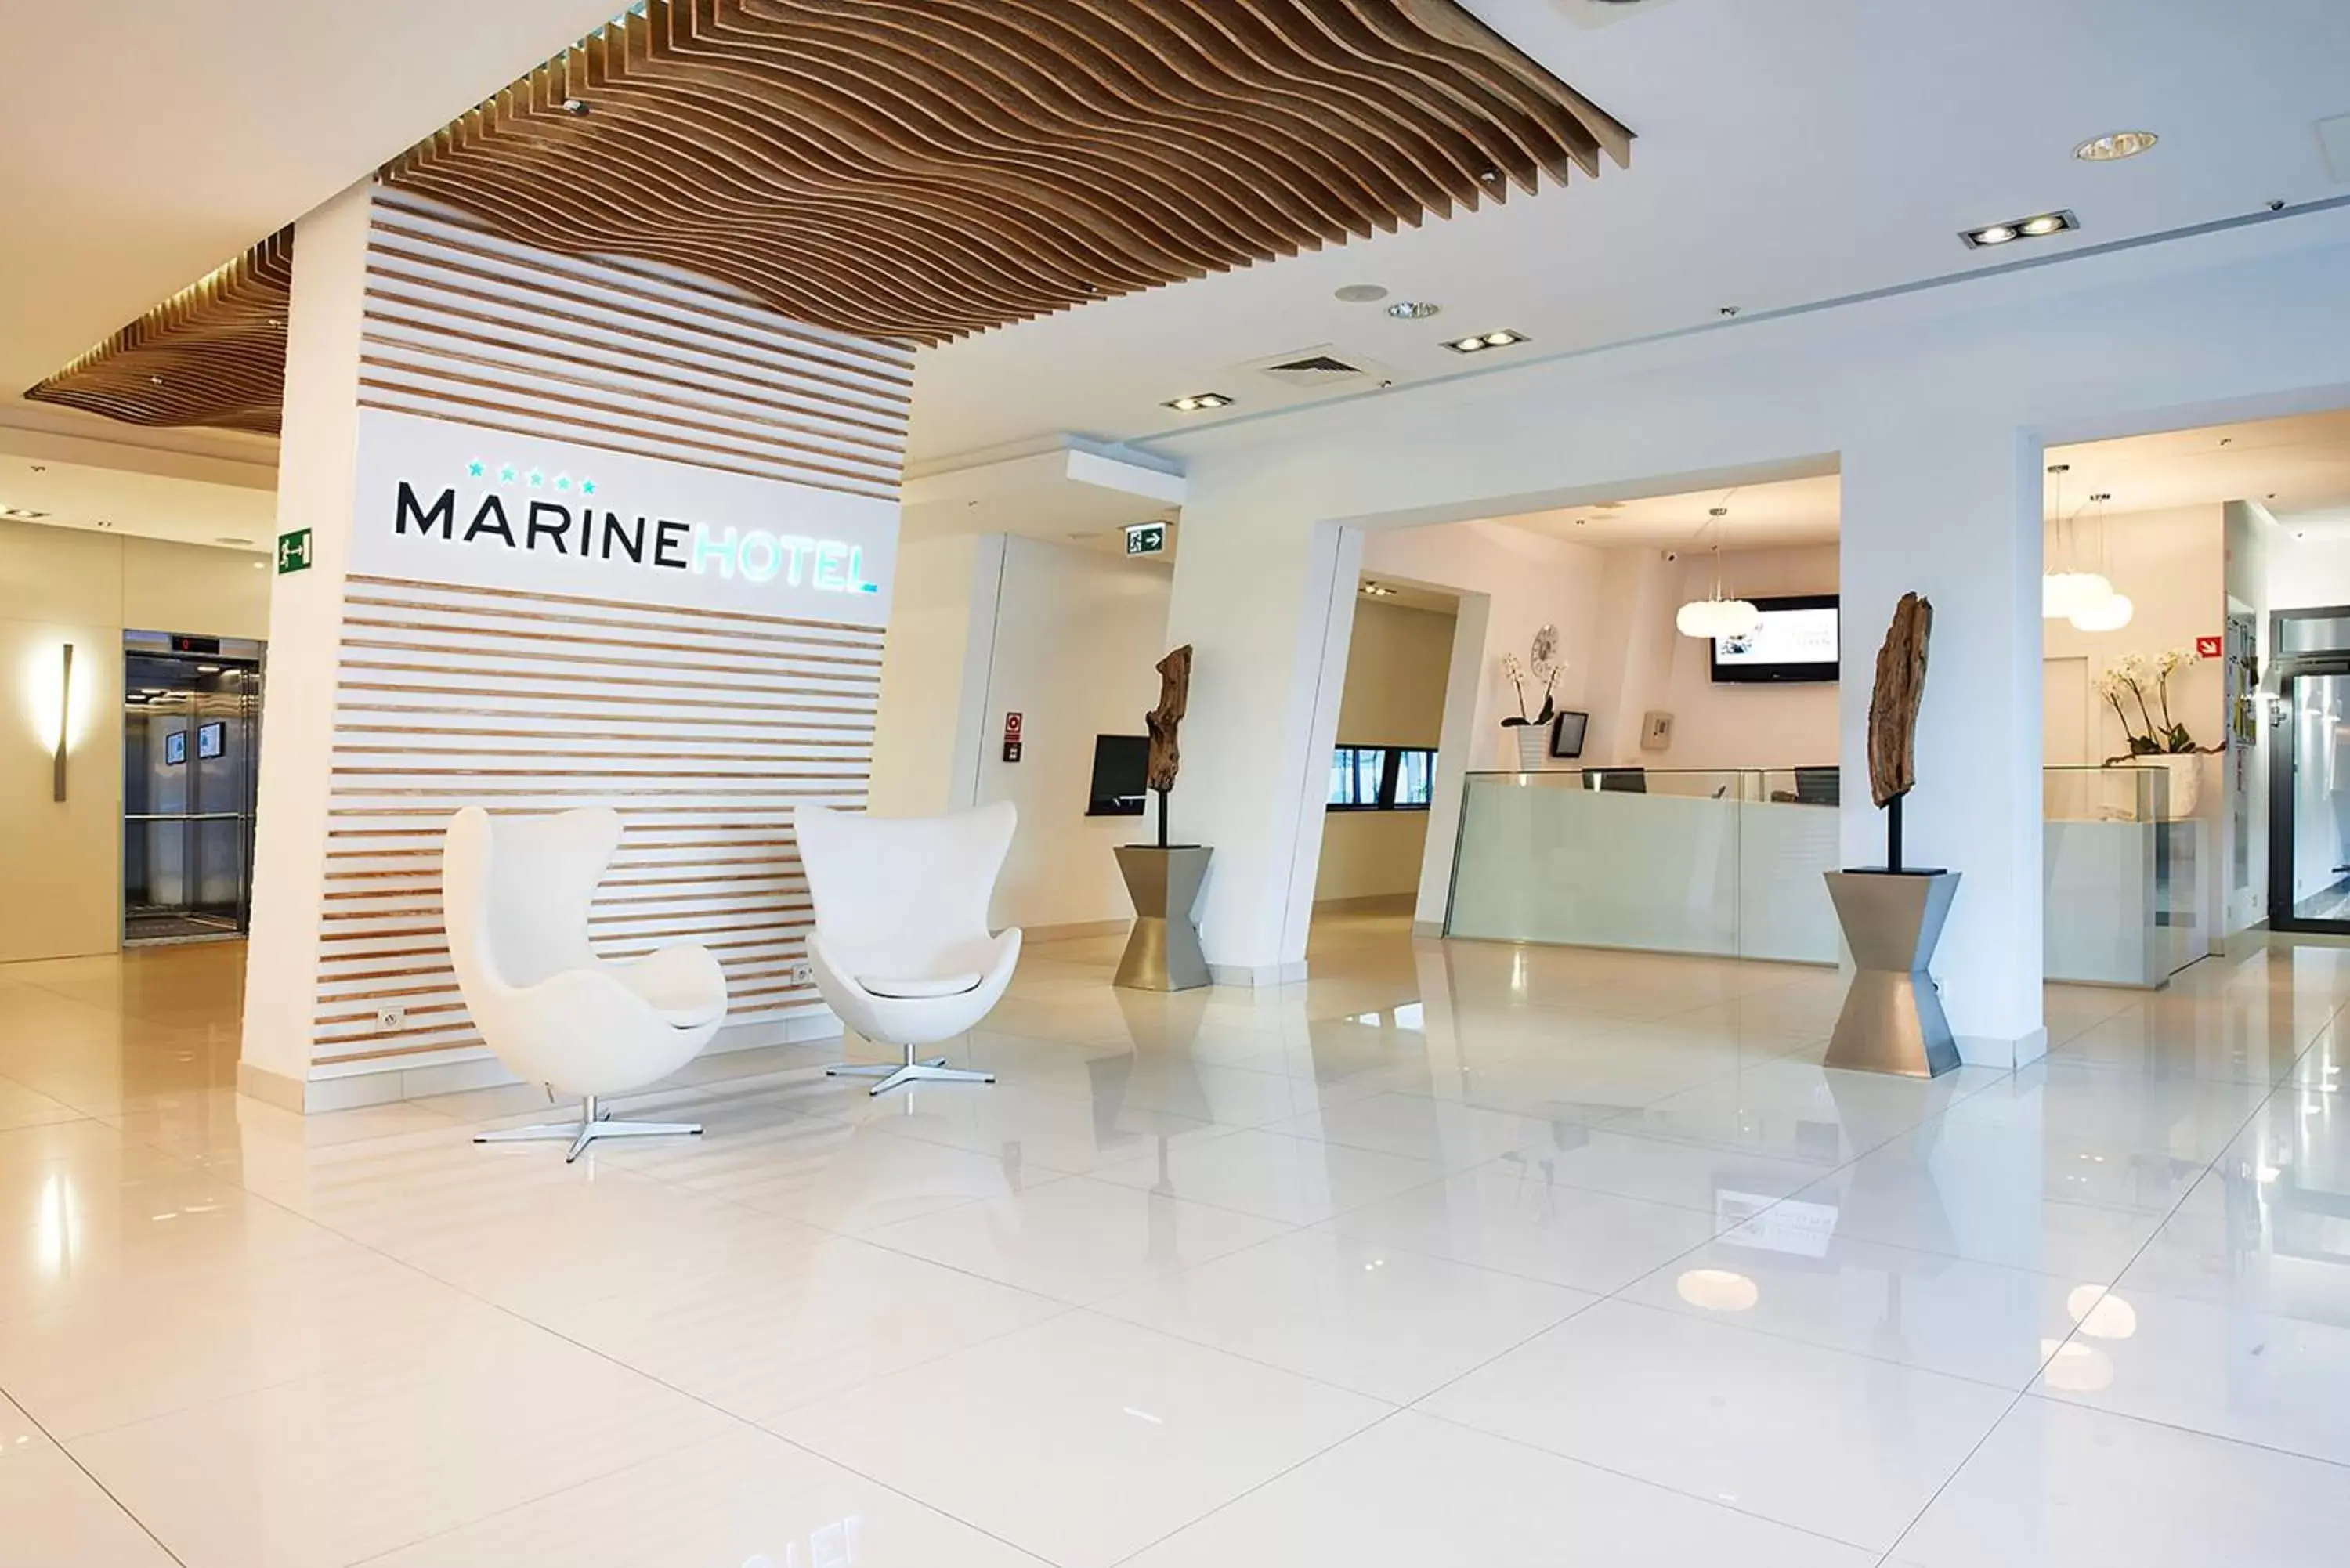 Lobby or reception in Marine Hotel by Zdrojowa